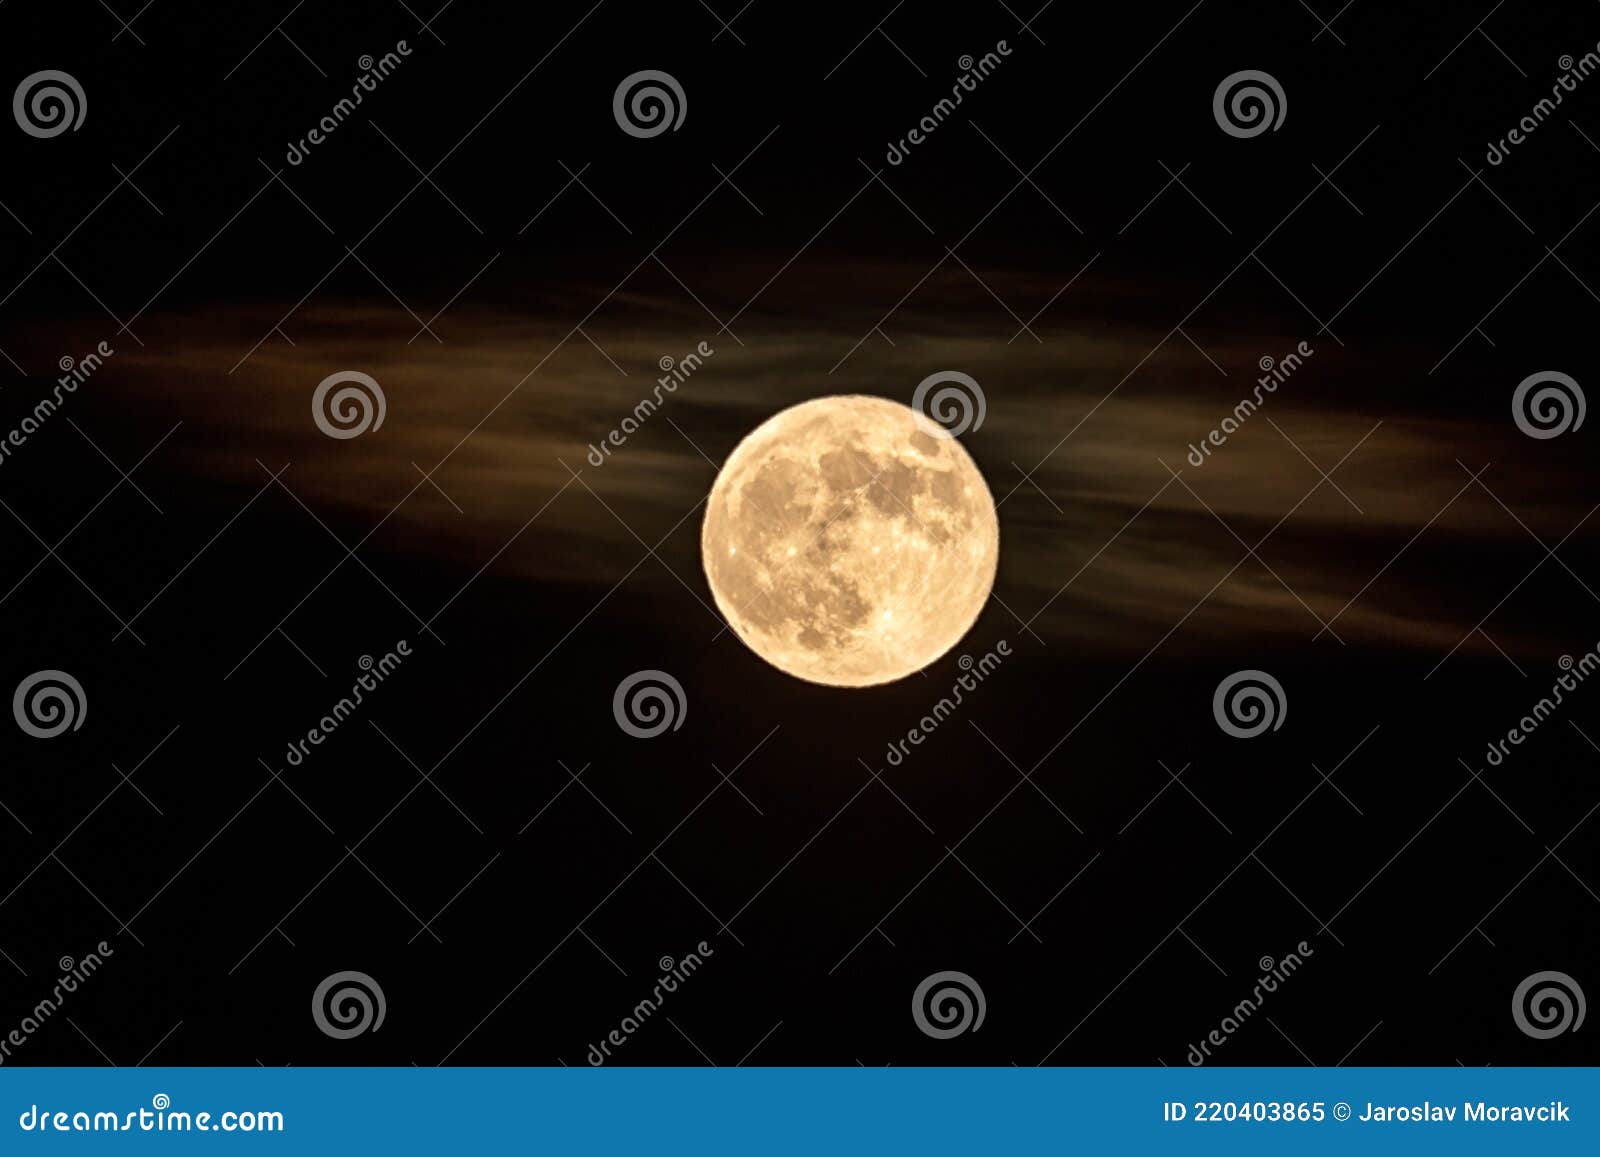 Full moon. Supermoon stock image. Image of night 220403865